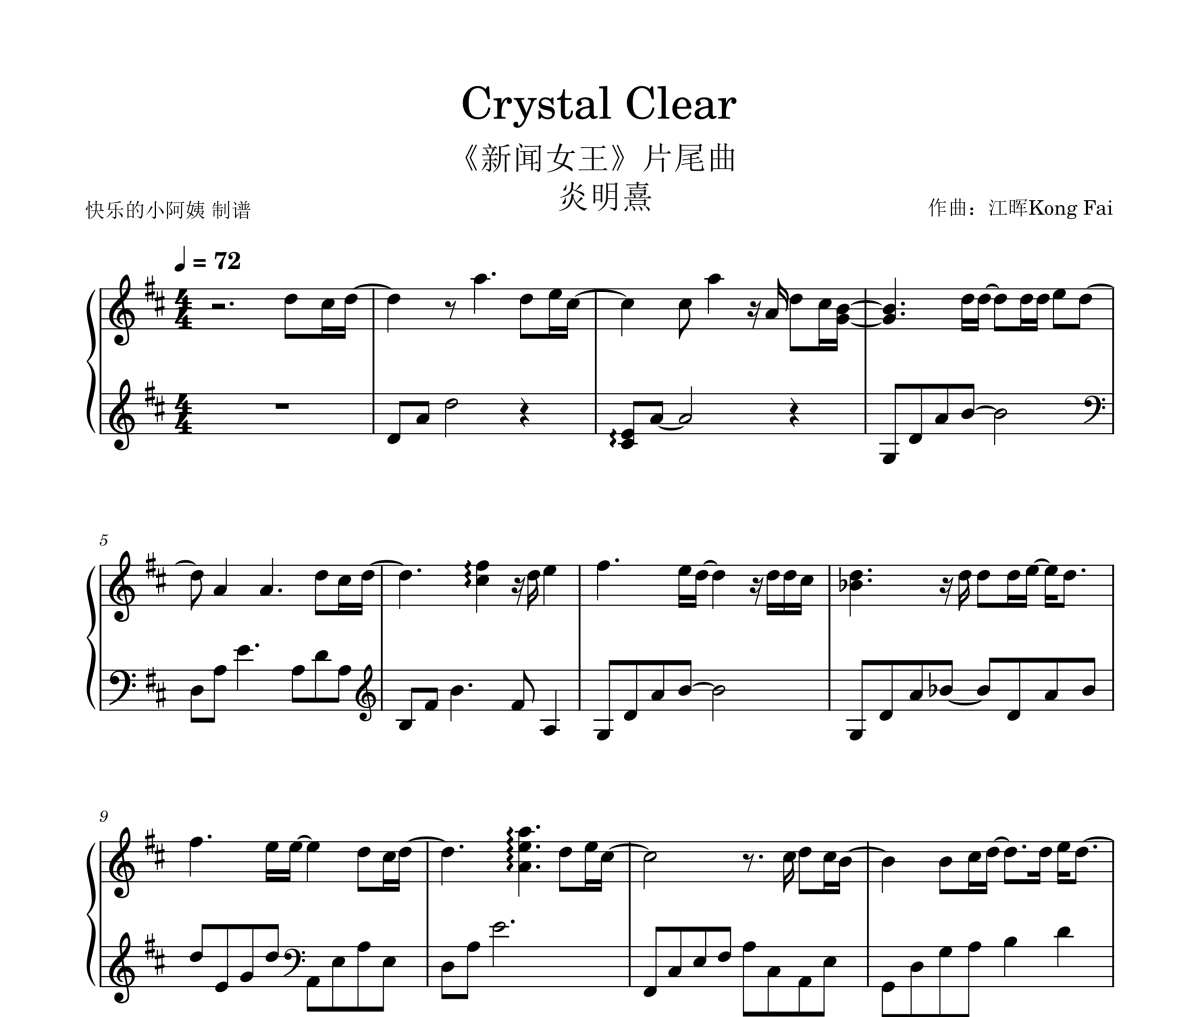 Crystal Clear-新闻女王片尾曲钢琴谱 炎明熹-Crystal Clear-新闻女王片尾曲五线谱钢琴谱